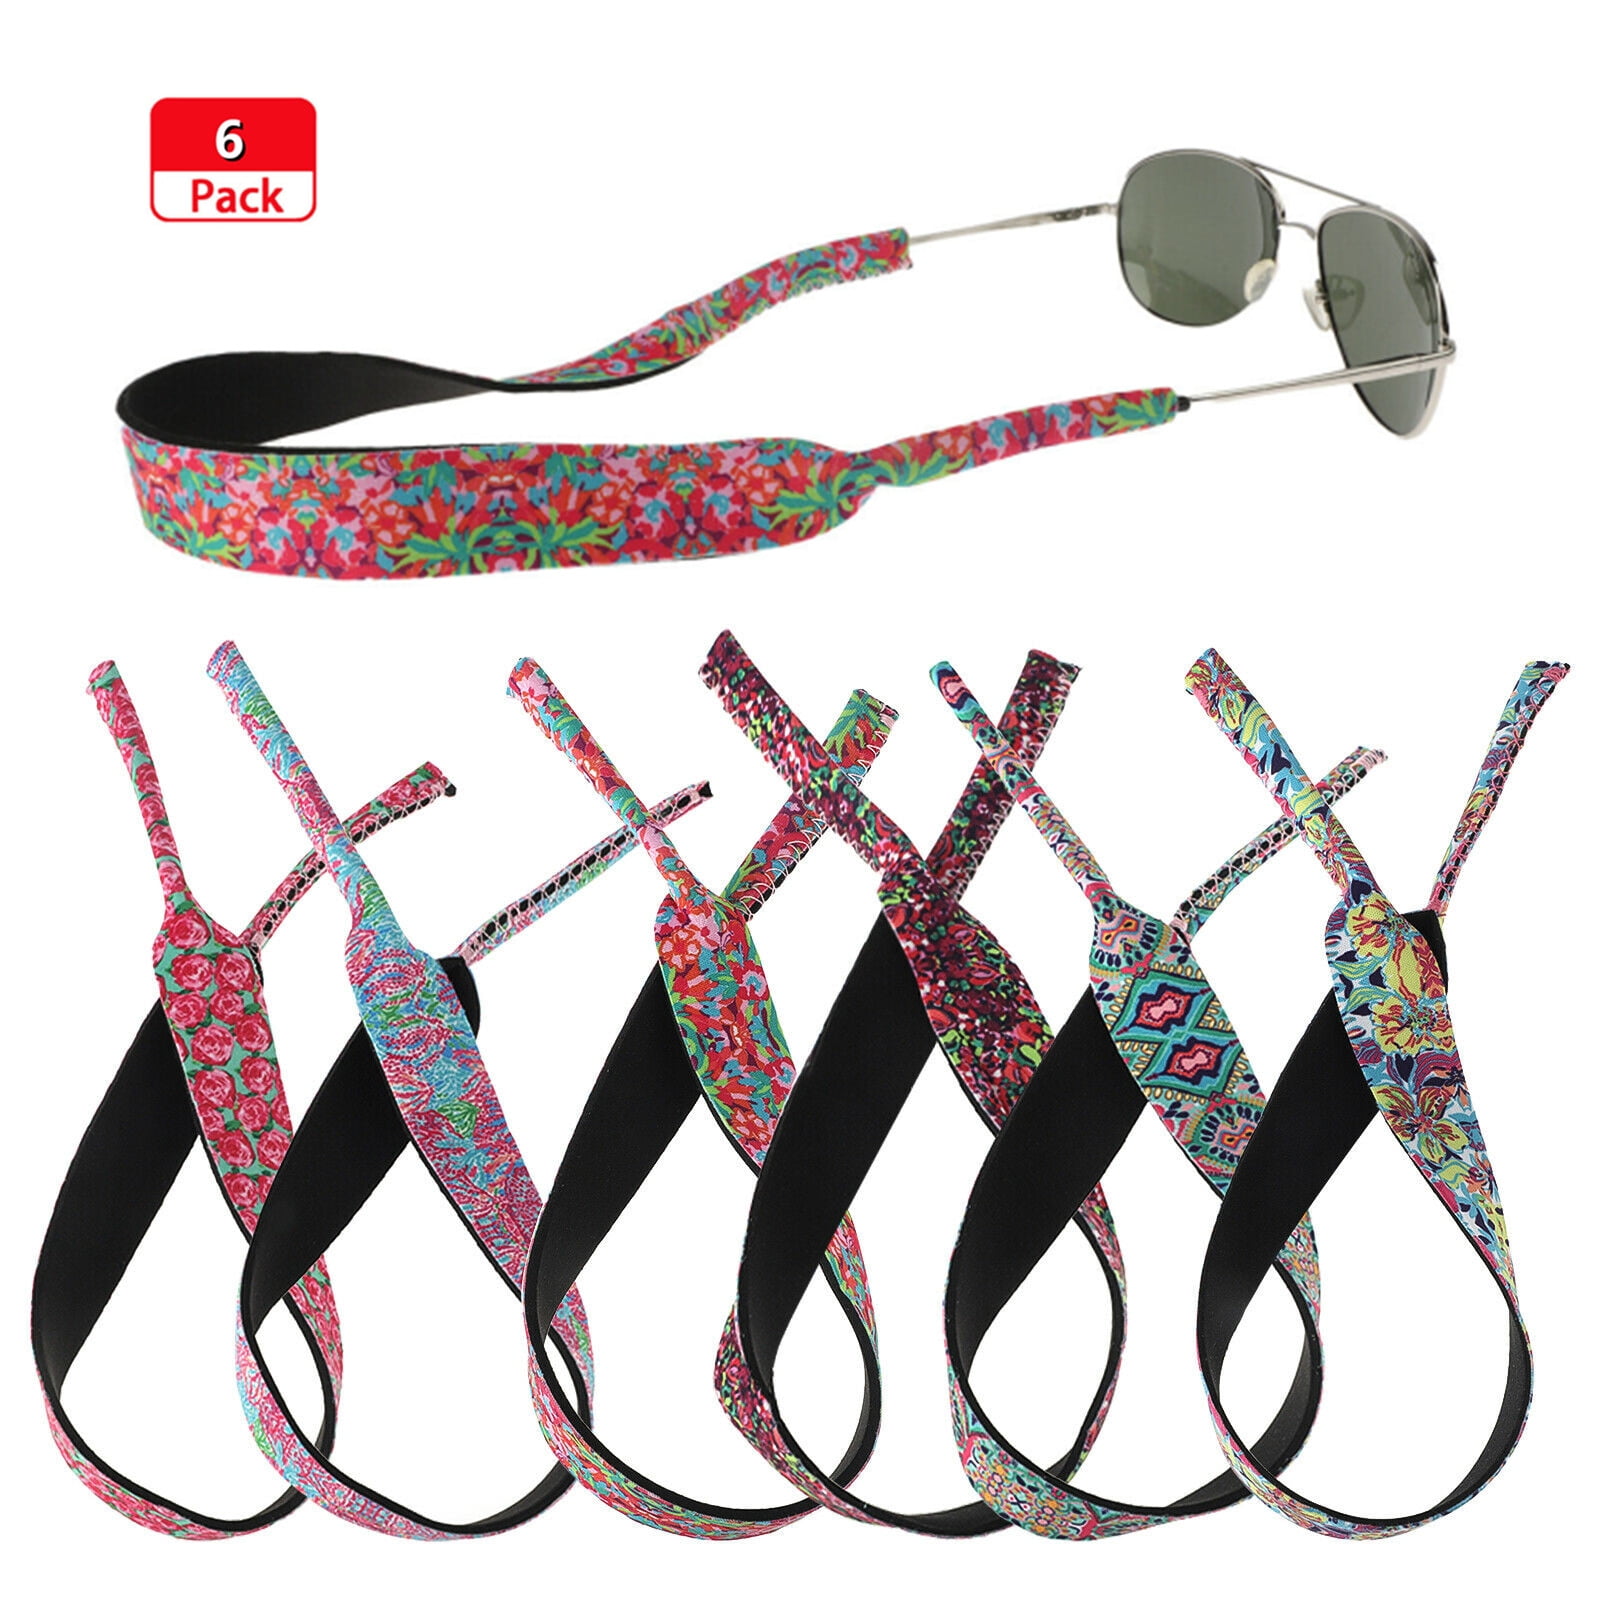 Floating Universal Sunglasses retainer straps Neoprene 7pcs set